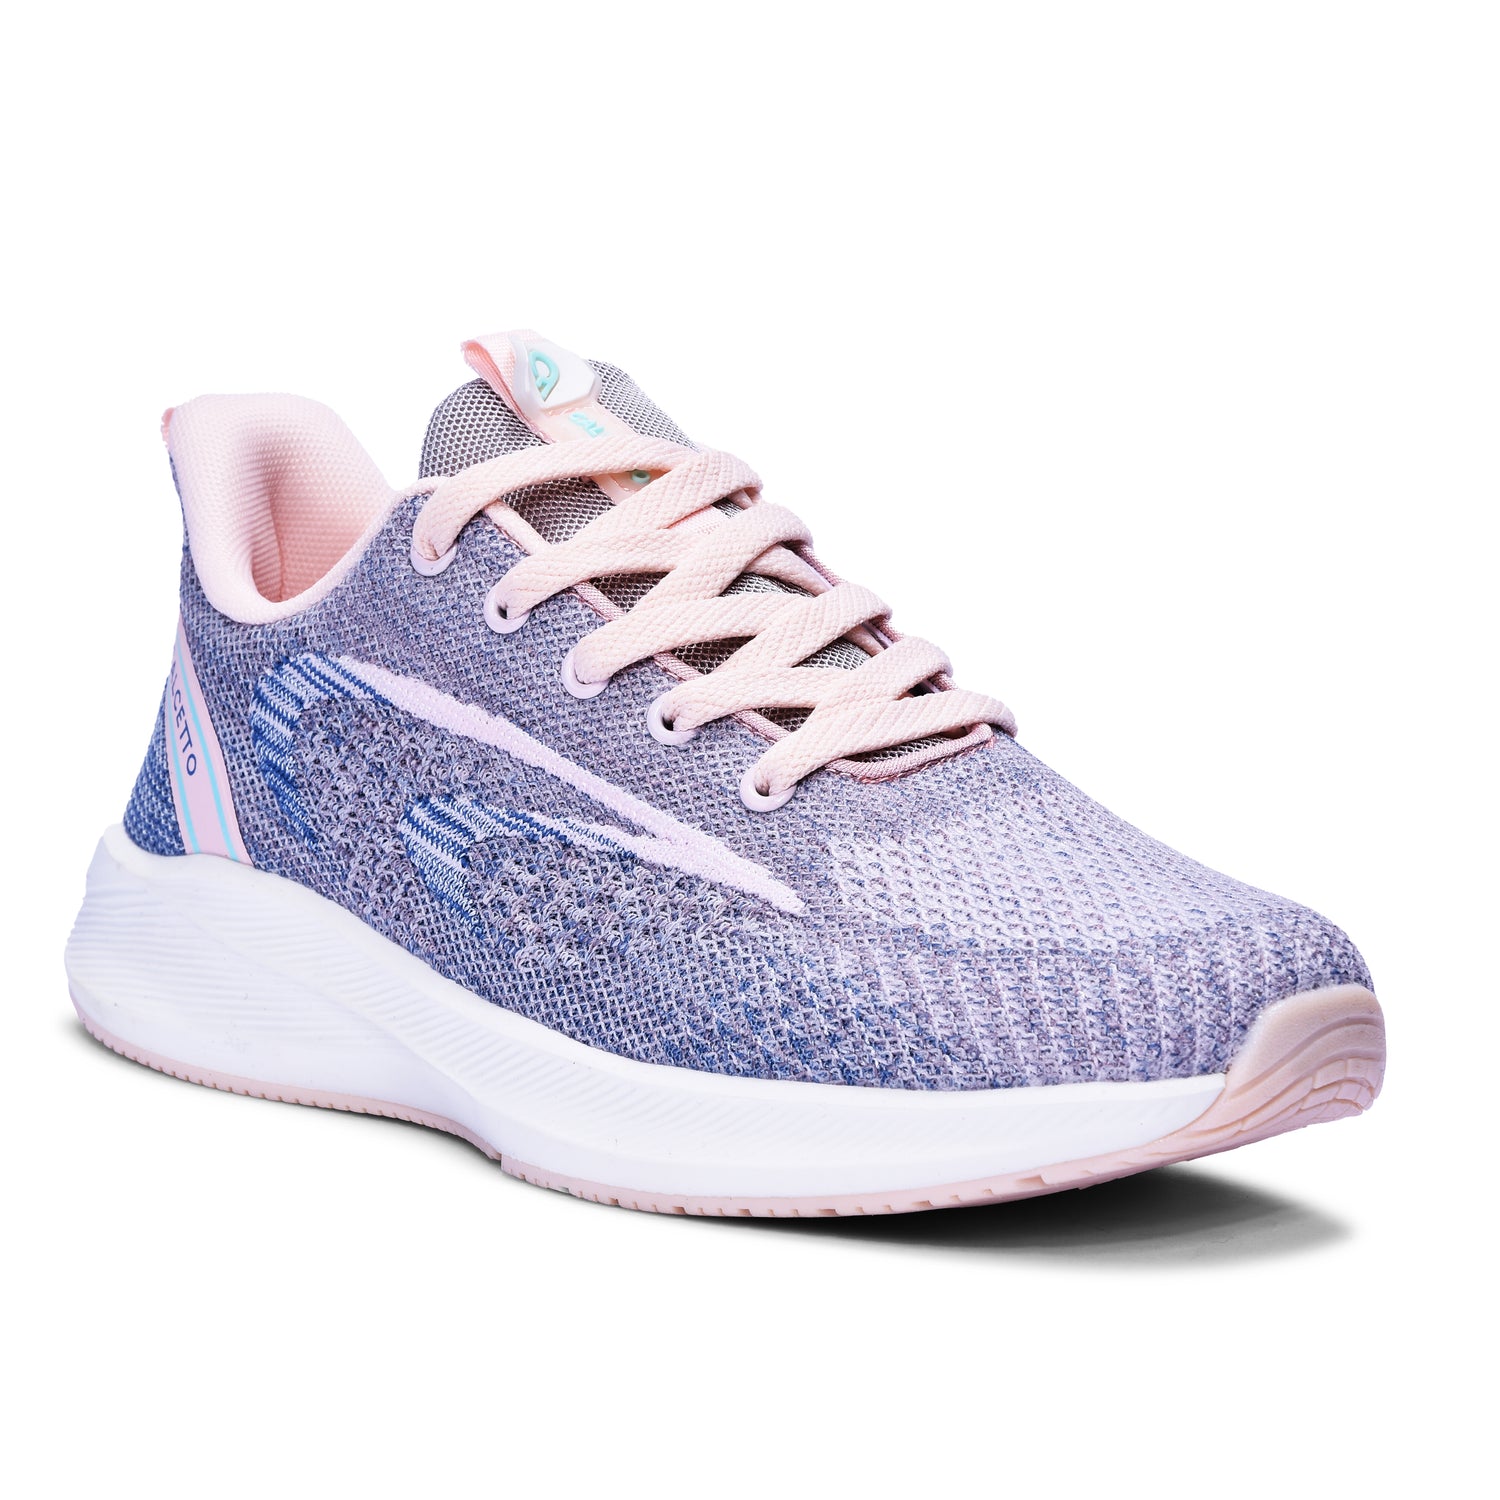 Calcetto CLT-9823 D Grey Peach Running Sports Shoe For Women